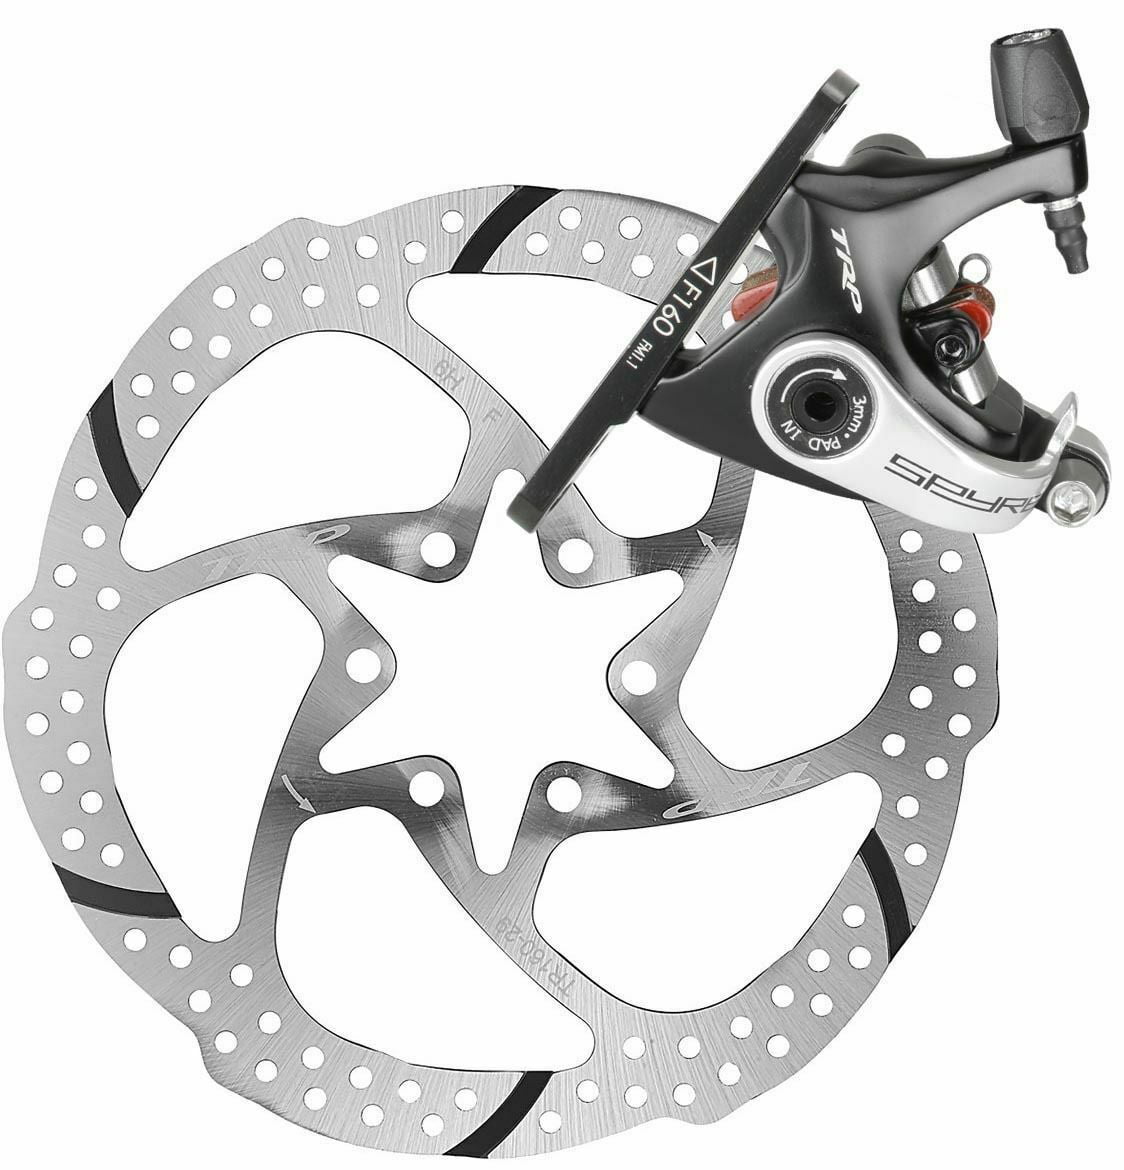 TRP SPYRE CNC Alloy Mechancial 160mm Rotor Road Bike Disc Brake Caliper s 